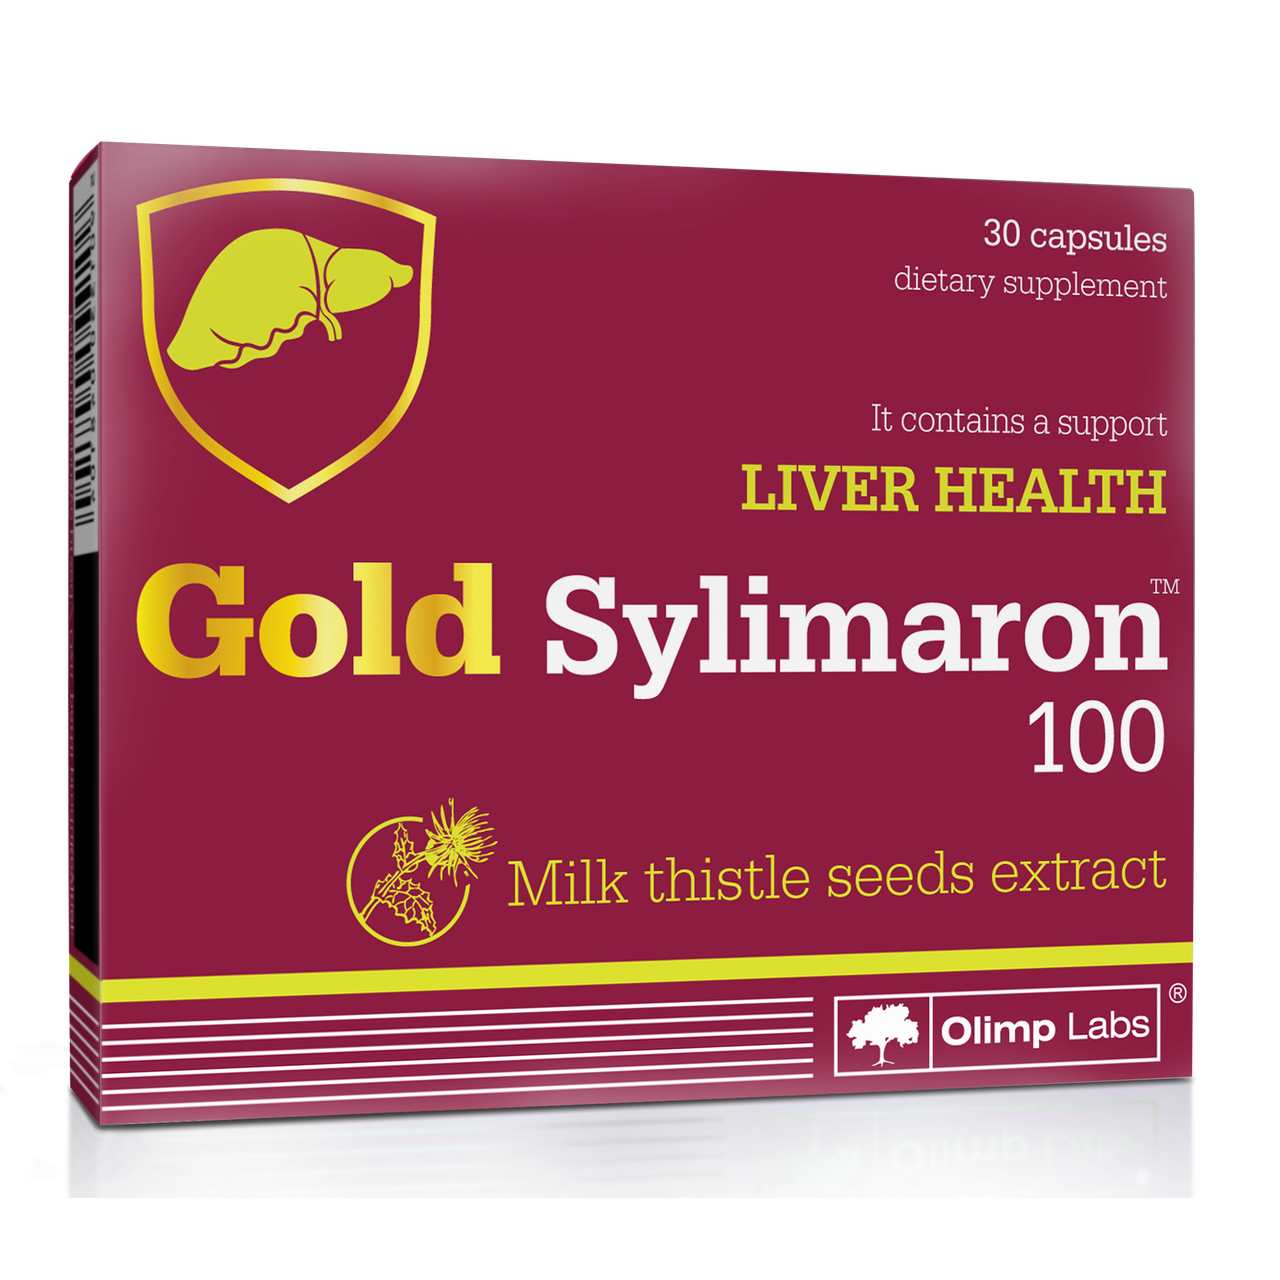 Olimp Labs Натуральная добавка Olimp Gold Sylimaron, 30 капсул, , 